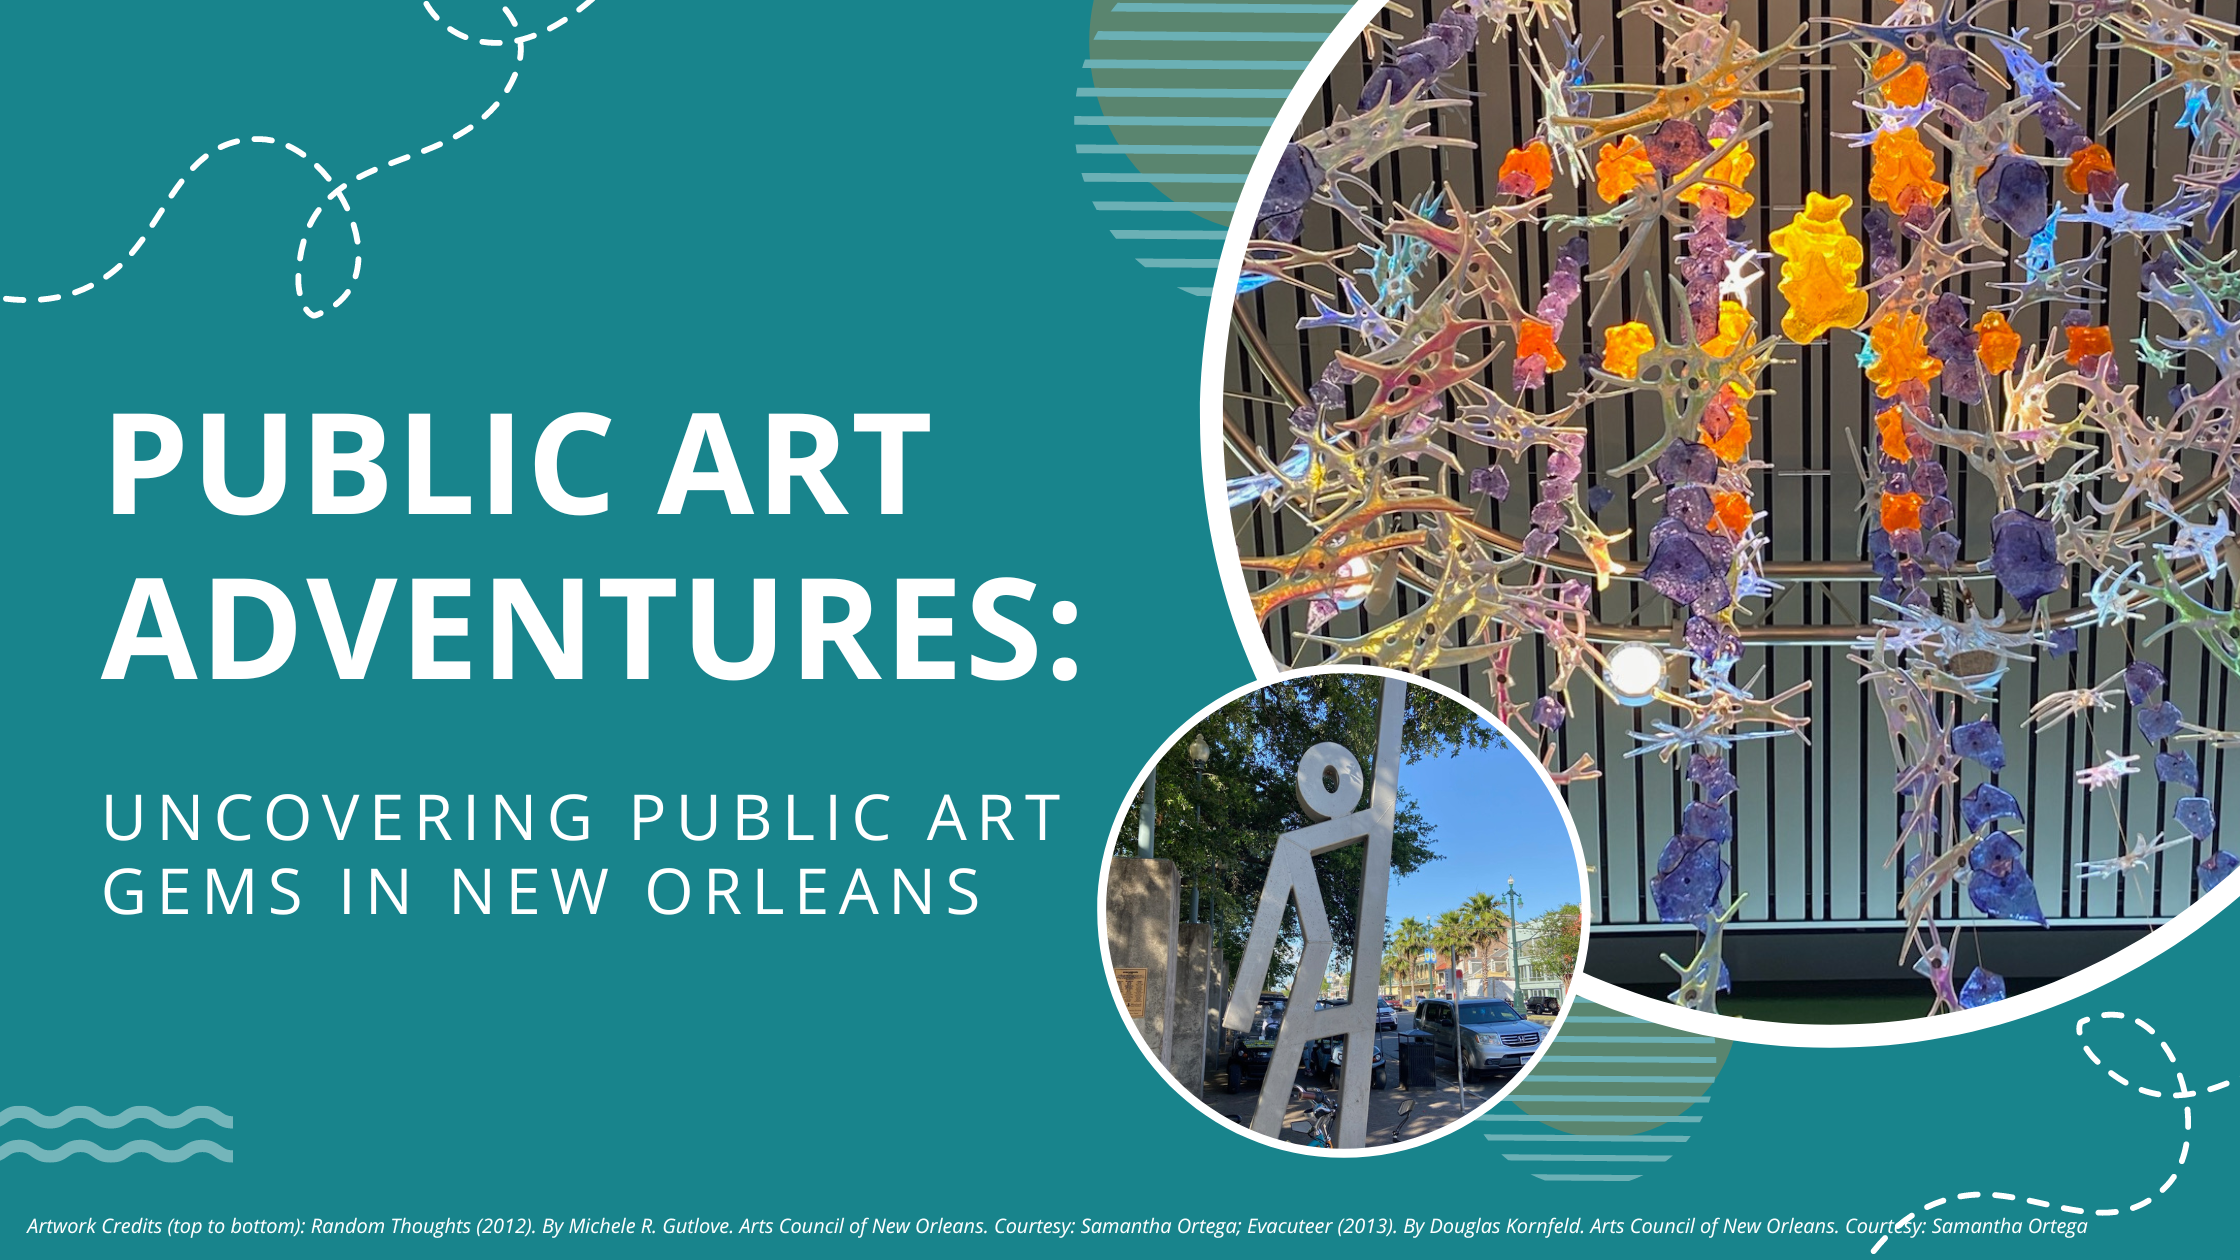 Public Art Adventures: Uncovering Public Art Gems in New Orleans